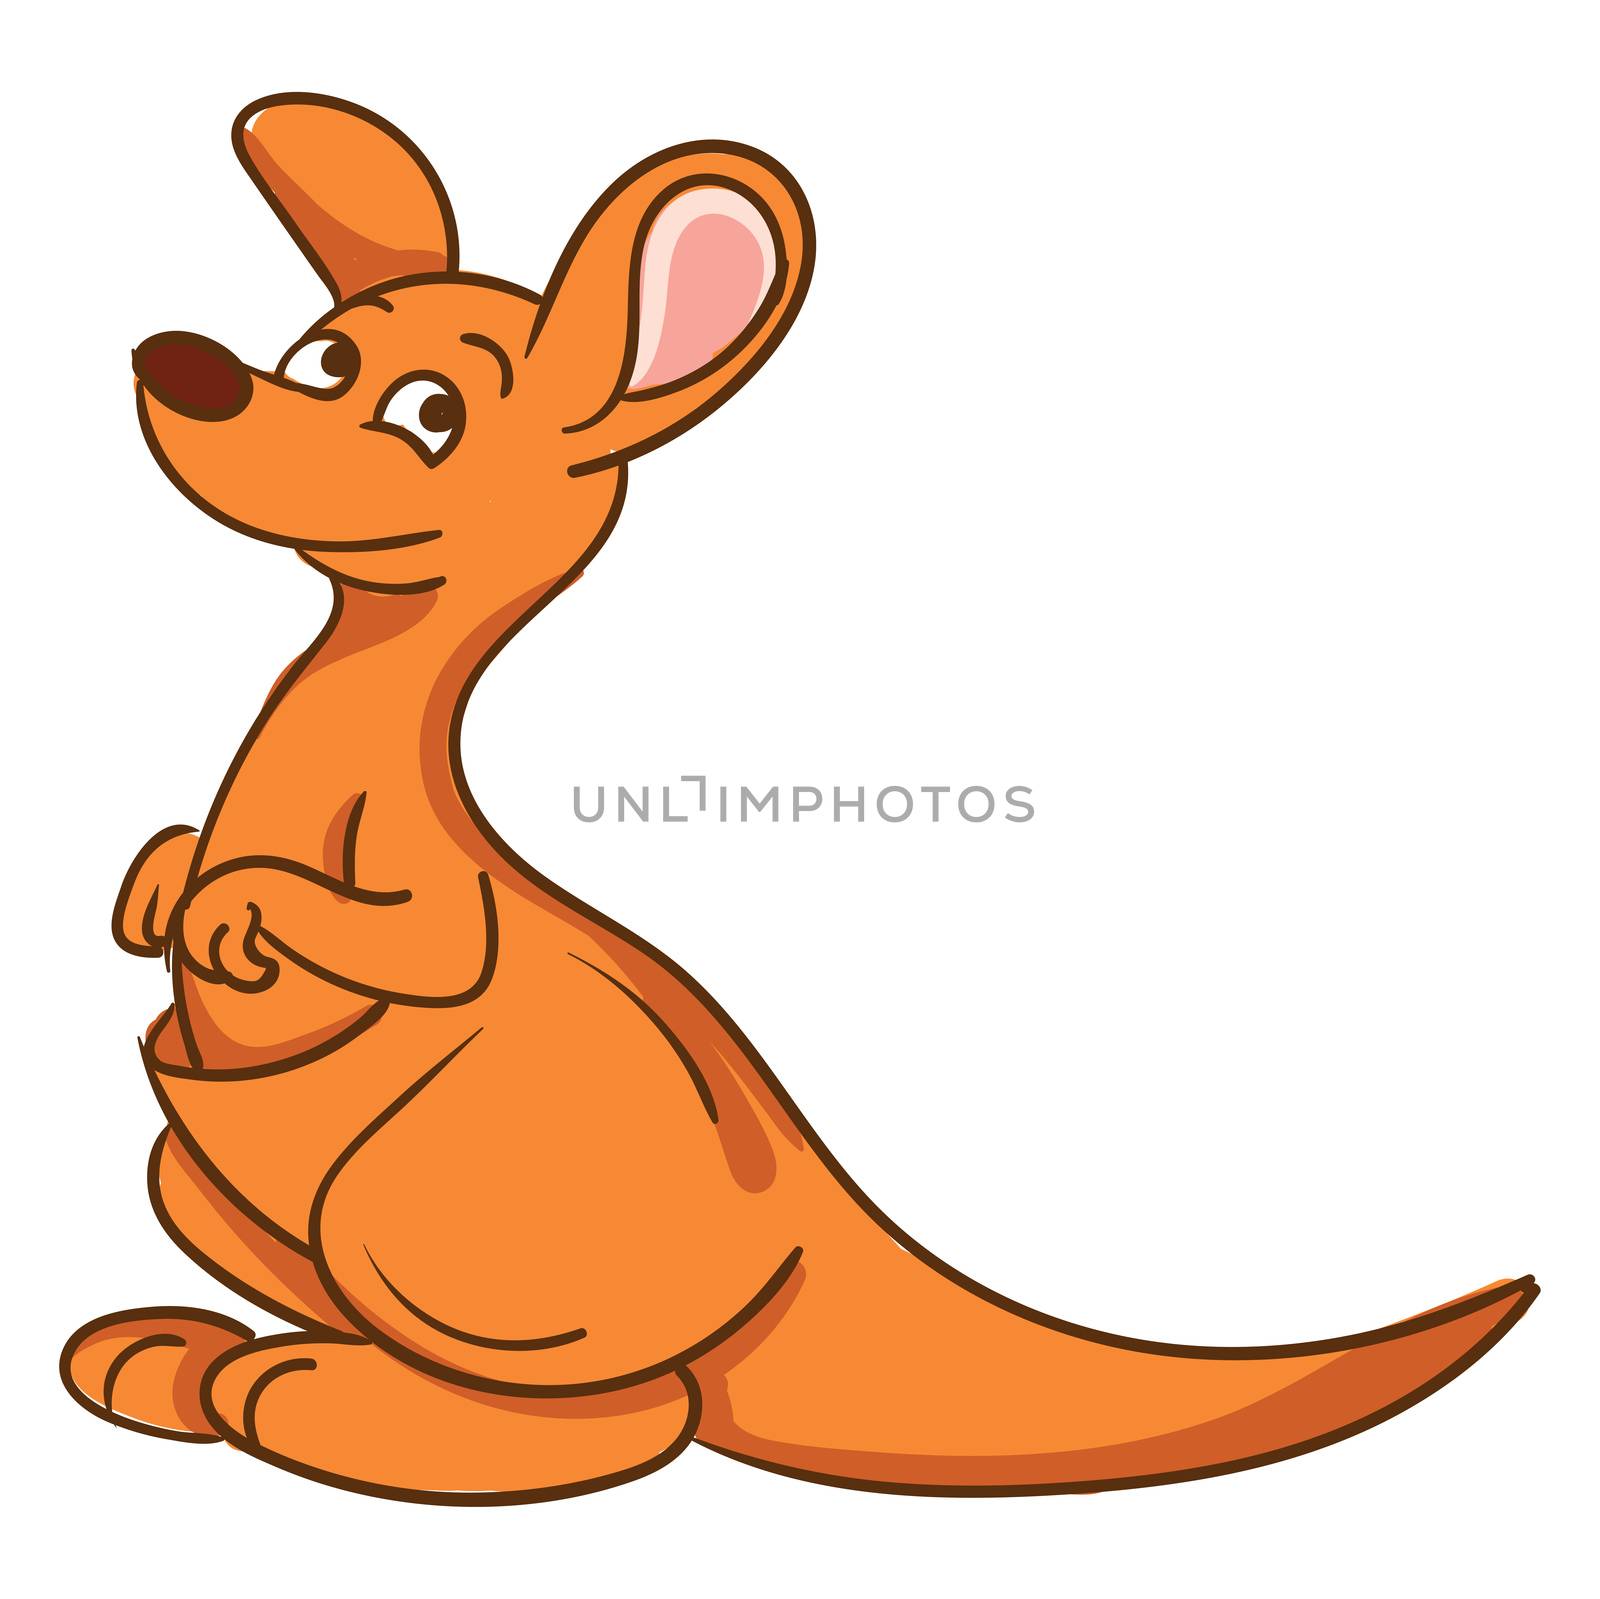 Happy kangaroo , illustration, vector on white background